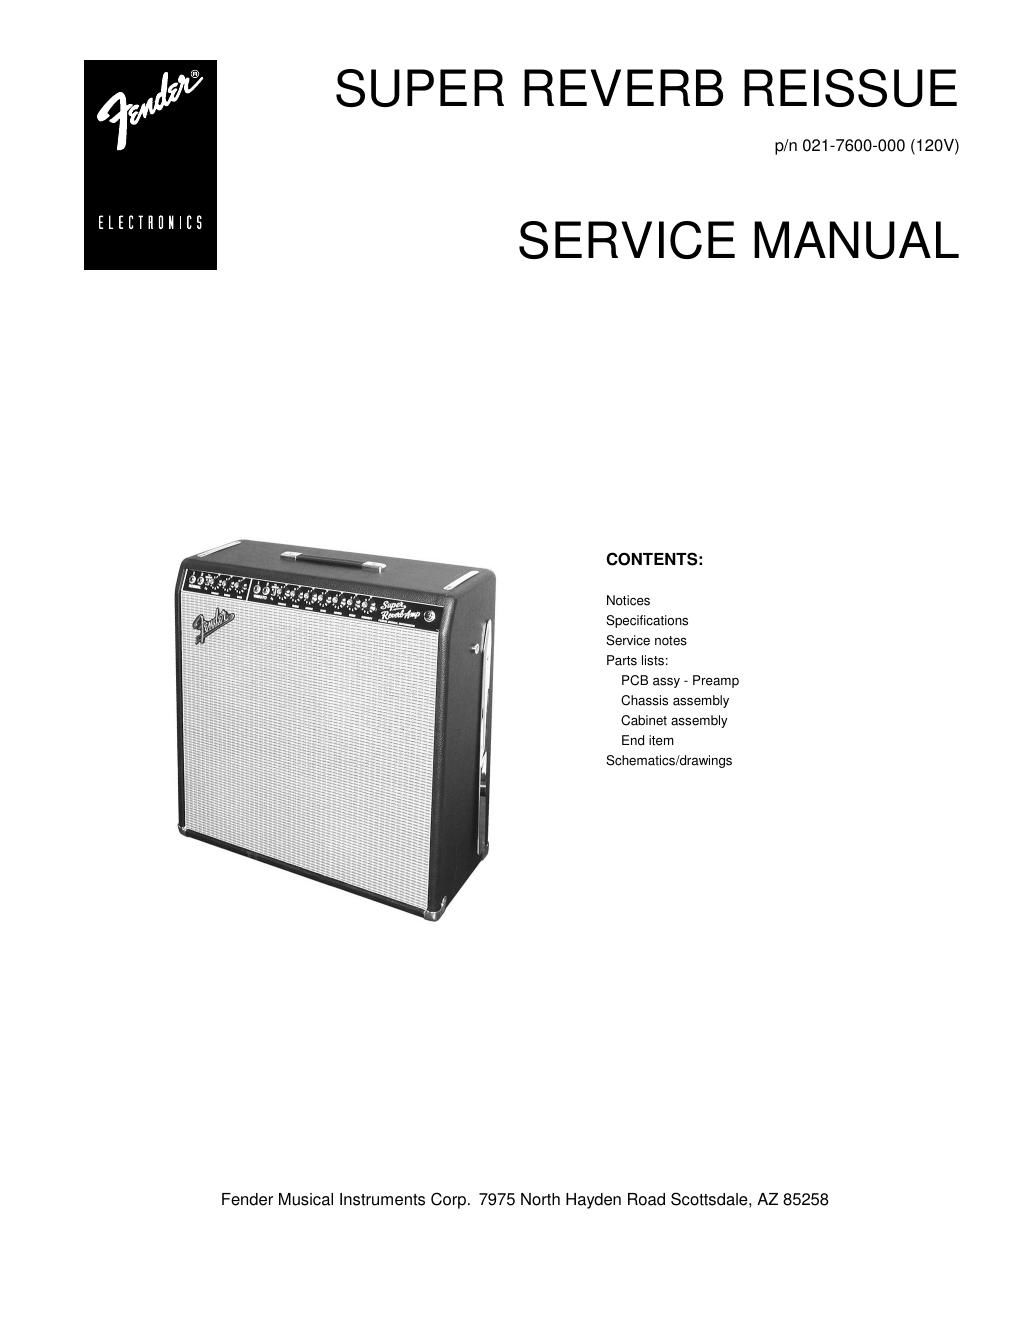 fender super reverb reissue service manual